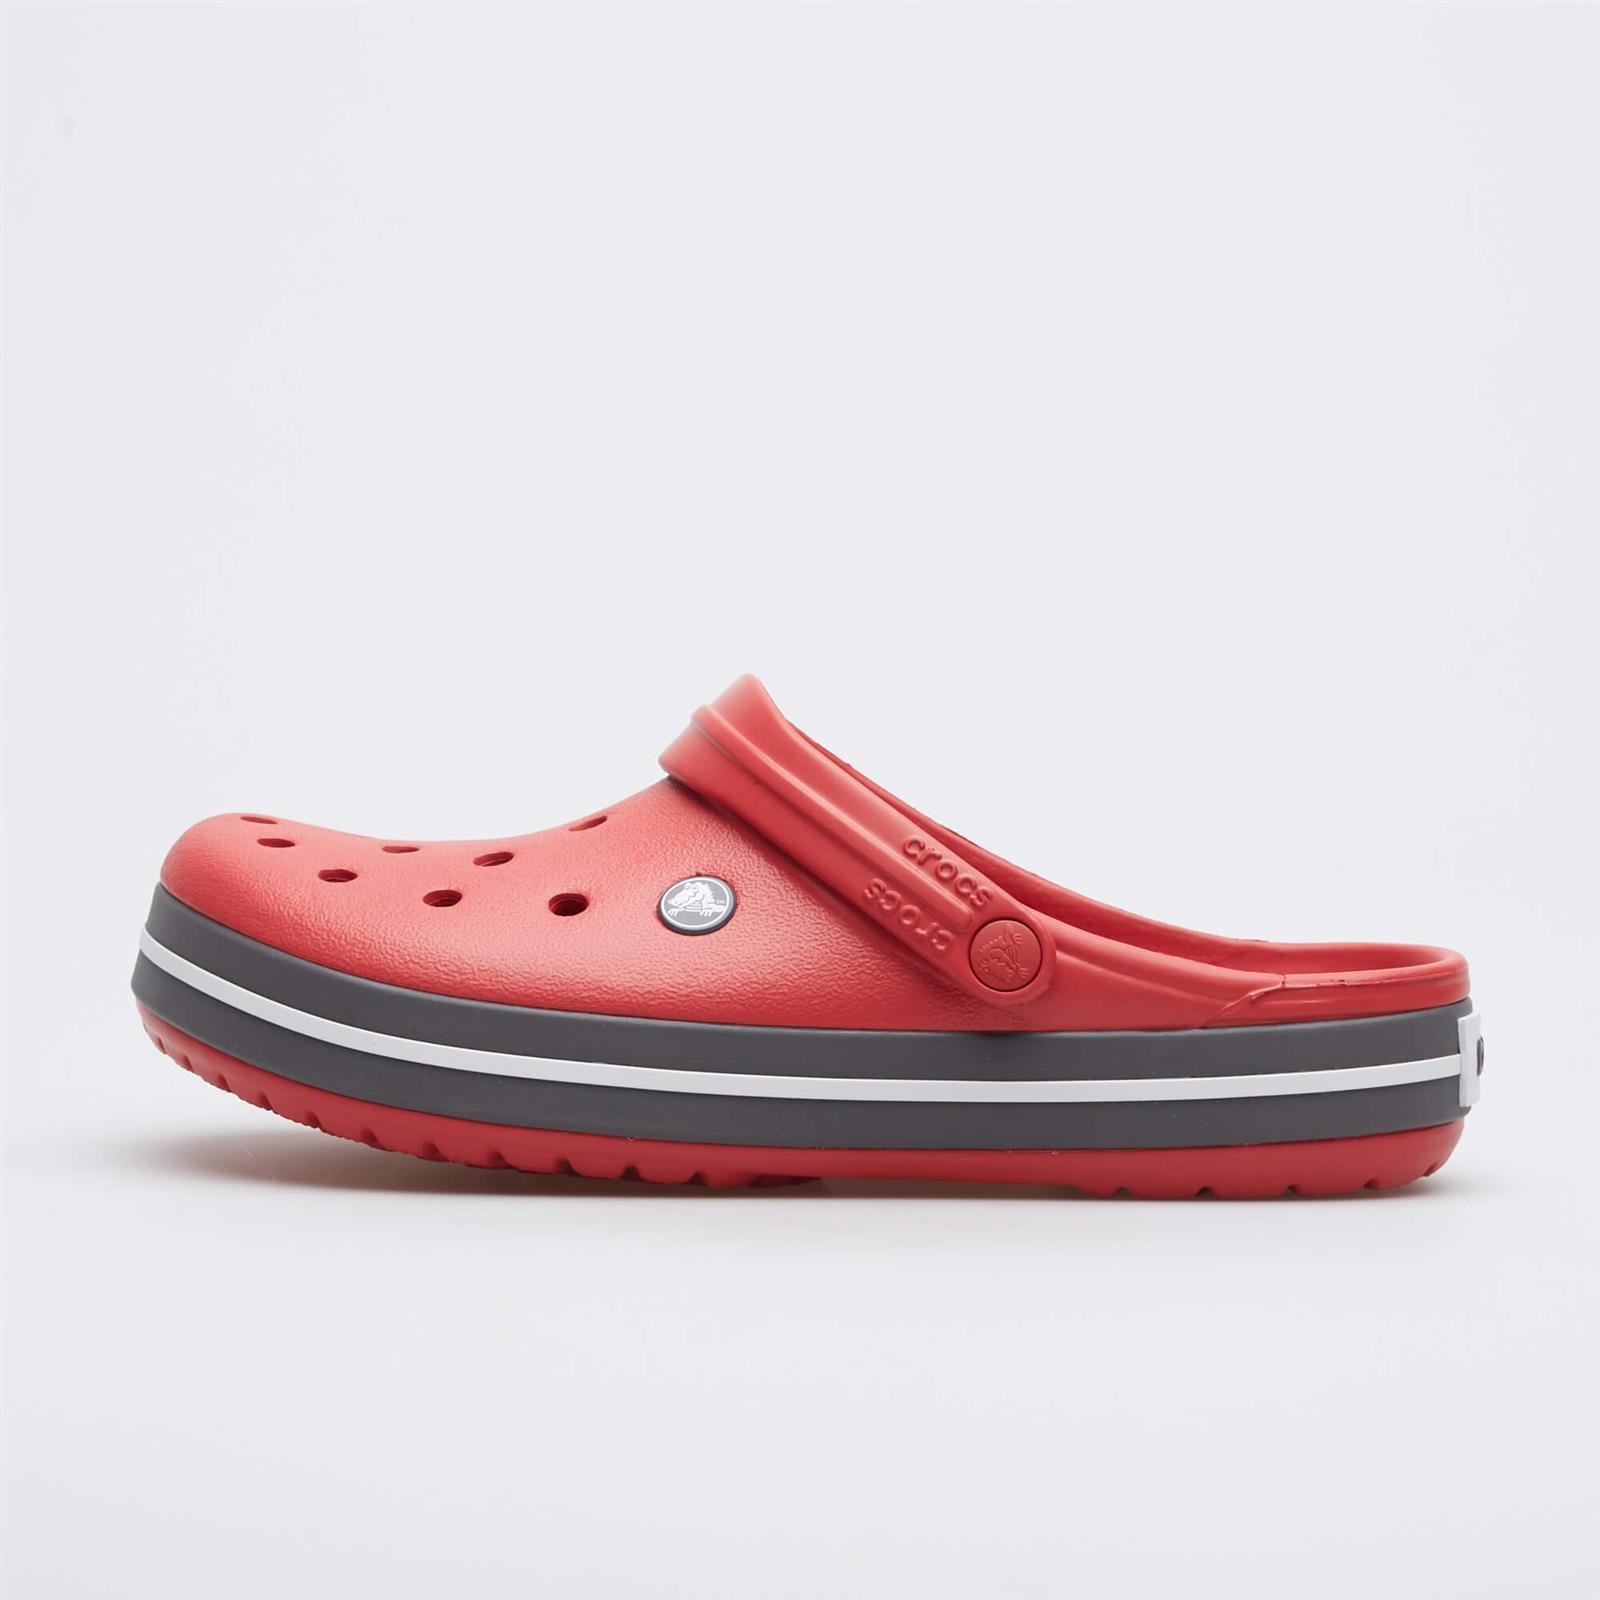 Crocs Crocband Clog PEPPER | Women's \ Women's footwear \ Men's \ Men's footwear \ Flip-flops/Sandals Brands \ #Marki - 2 \ Crocs